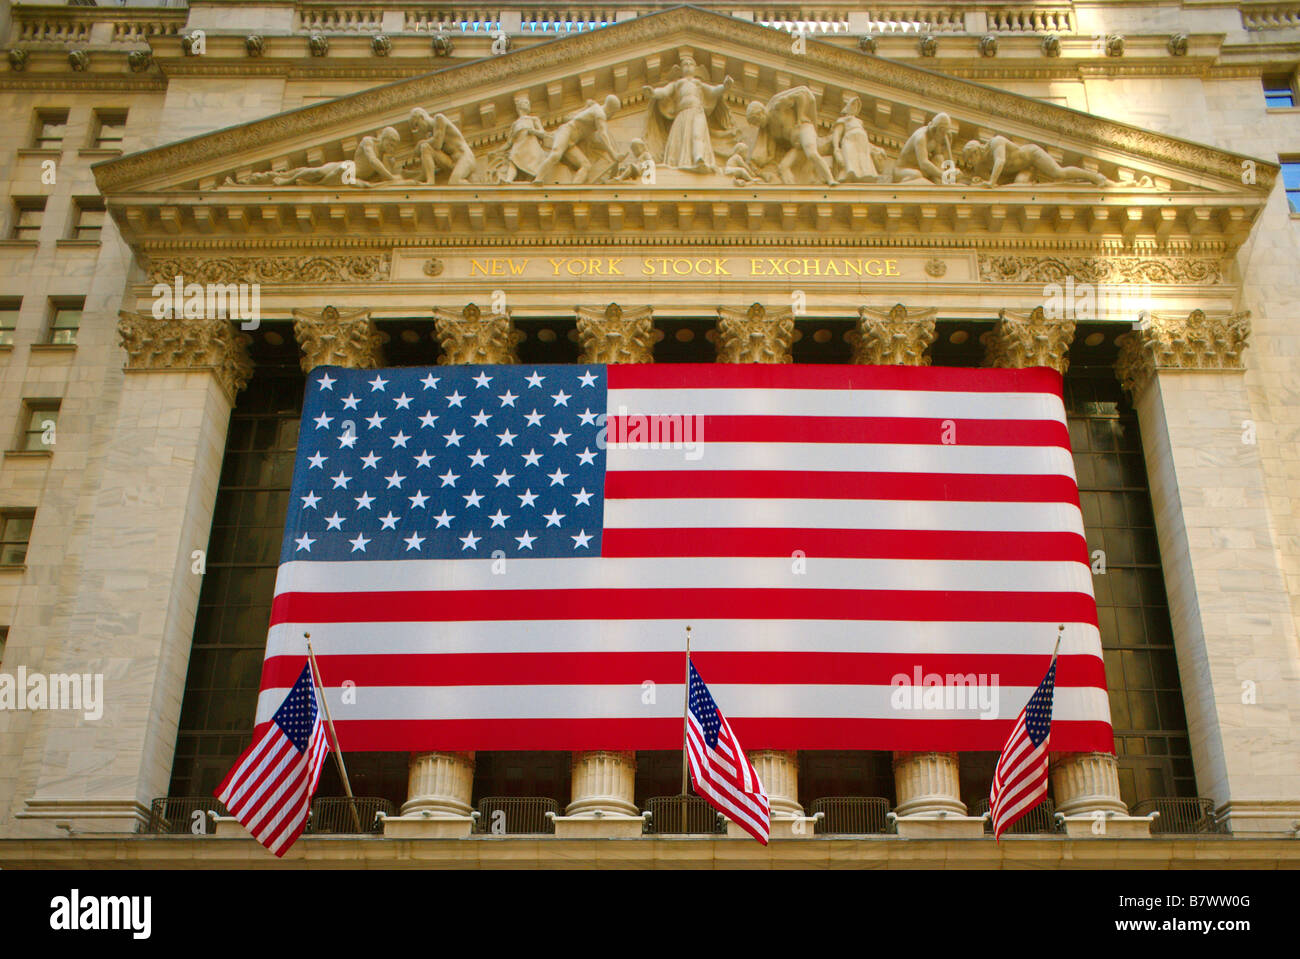 Stars & Stripes USA flag banner across frontage of New York Stock Exchange Stock Photo